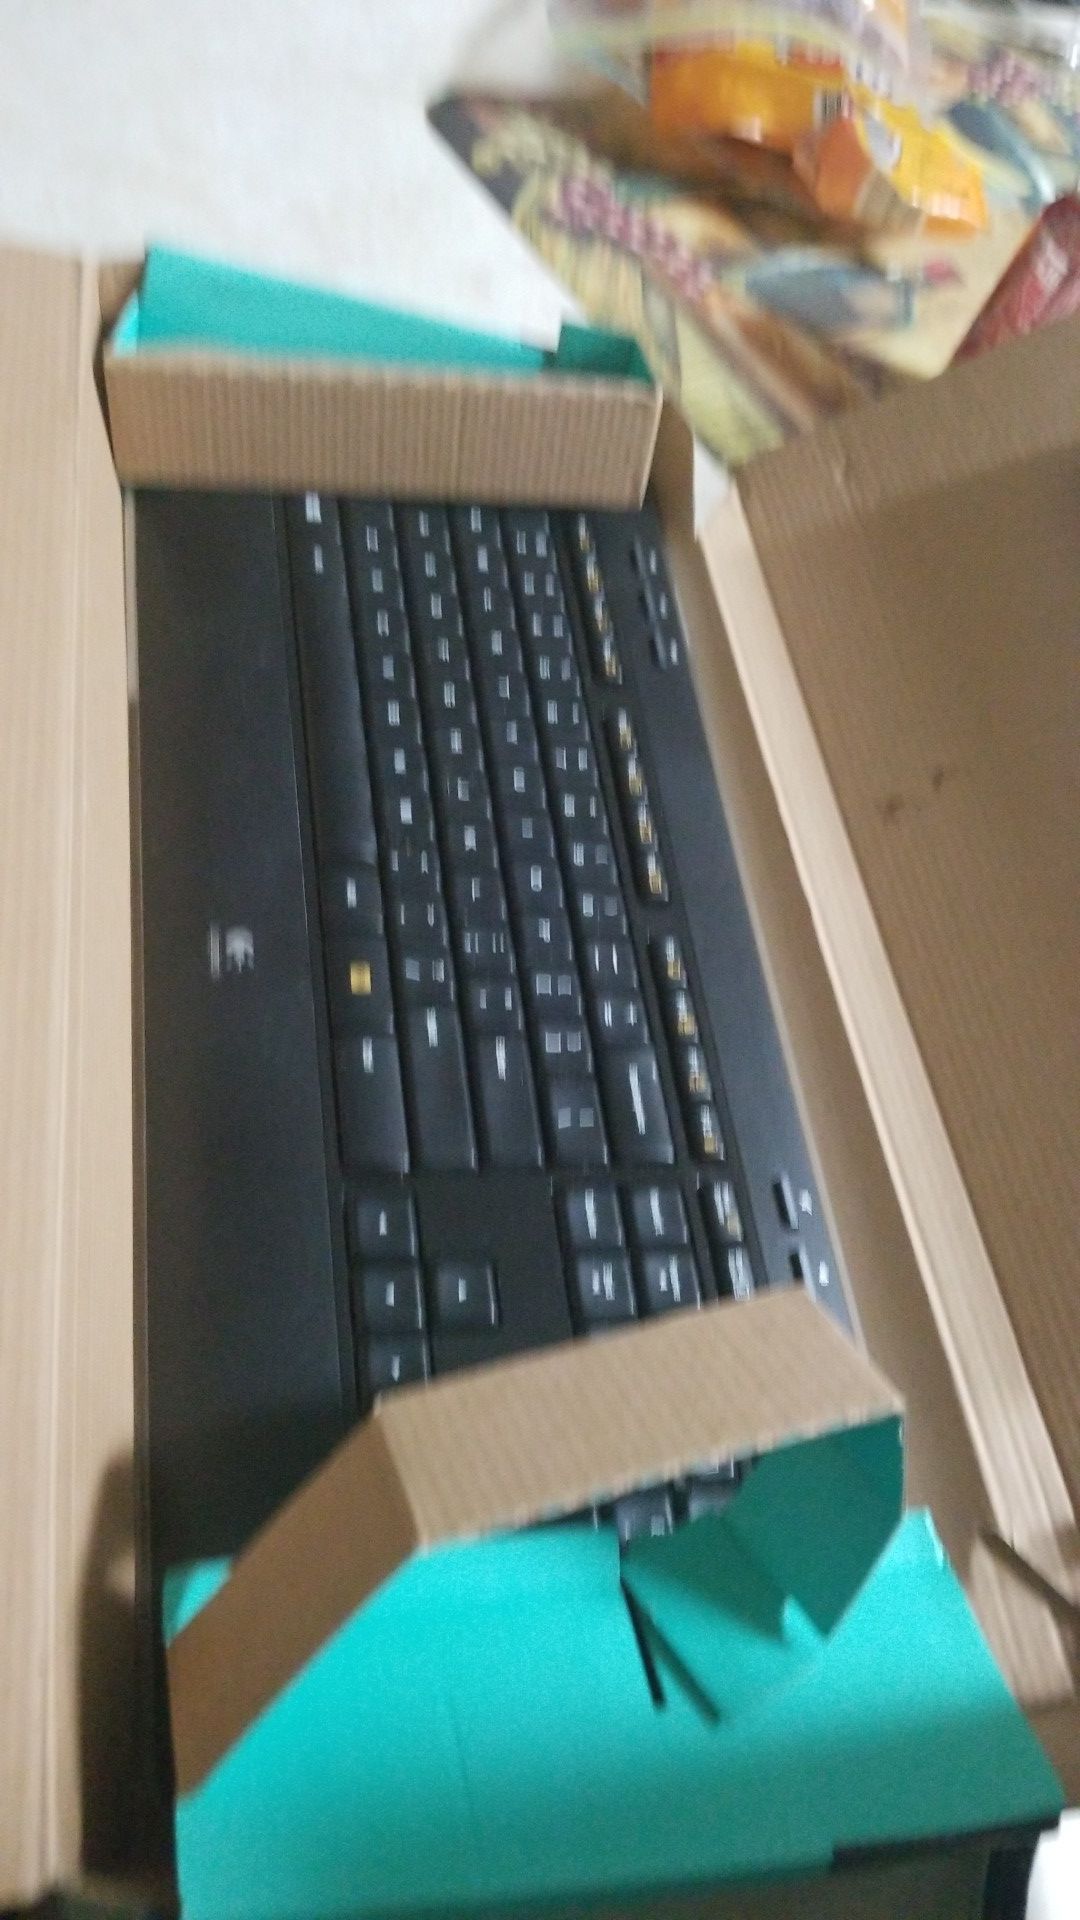 Mk320 wireless logitech keyboard(no mouse)